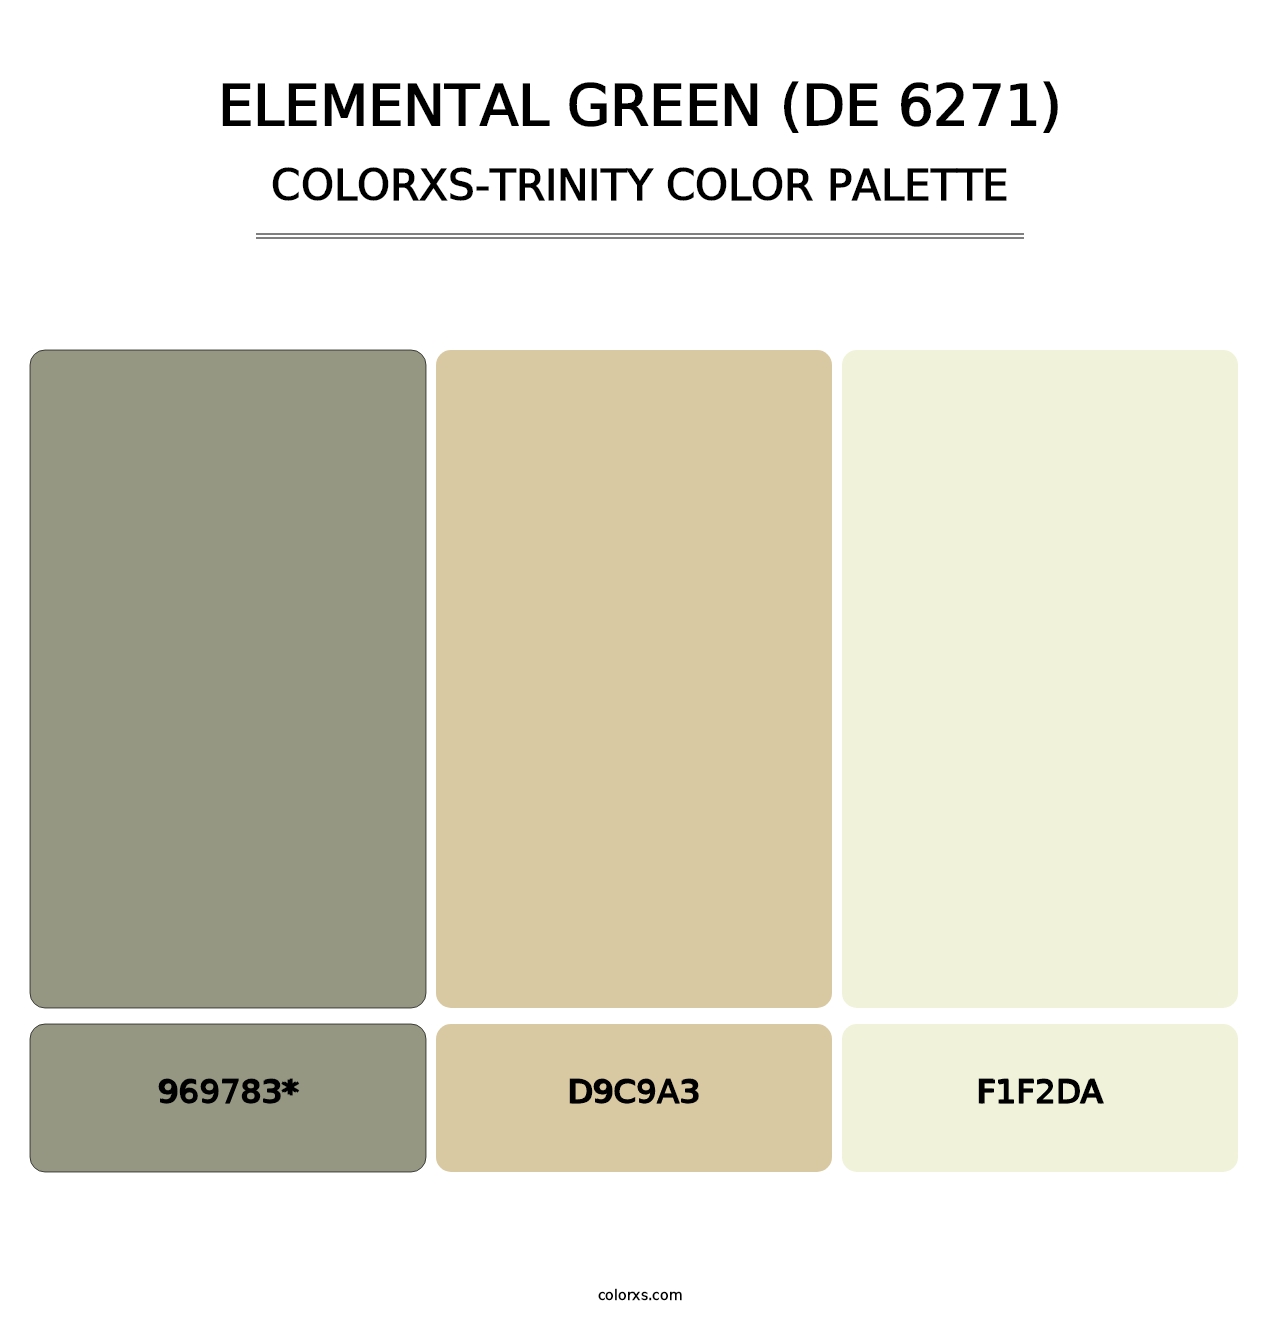 Elemental Green (DE 6271) - Colorxs Trinity Palette